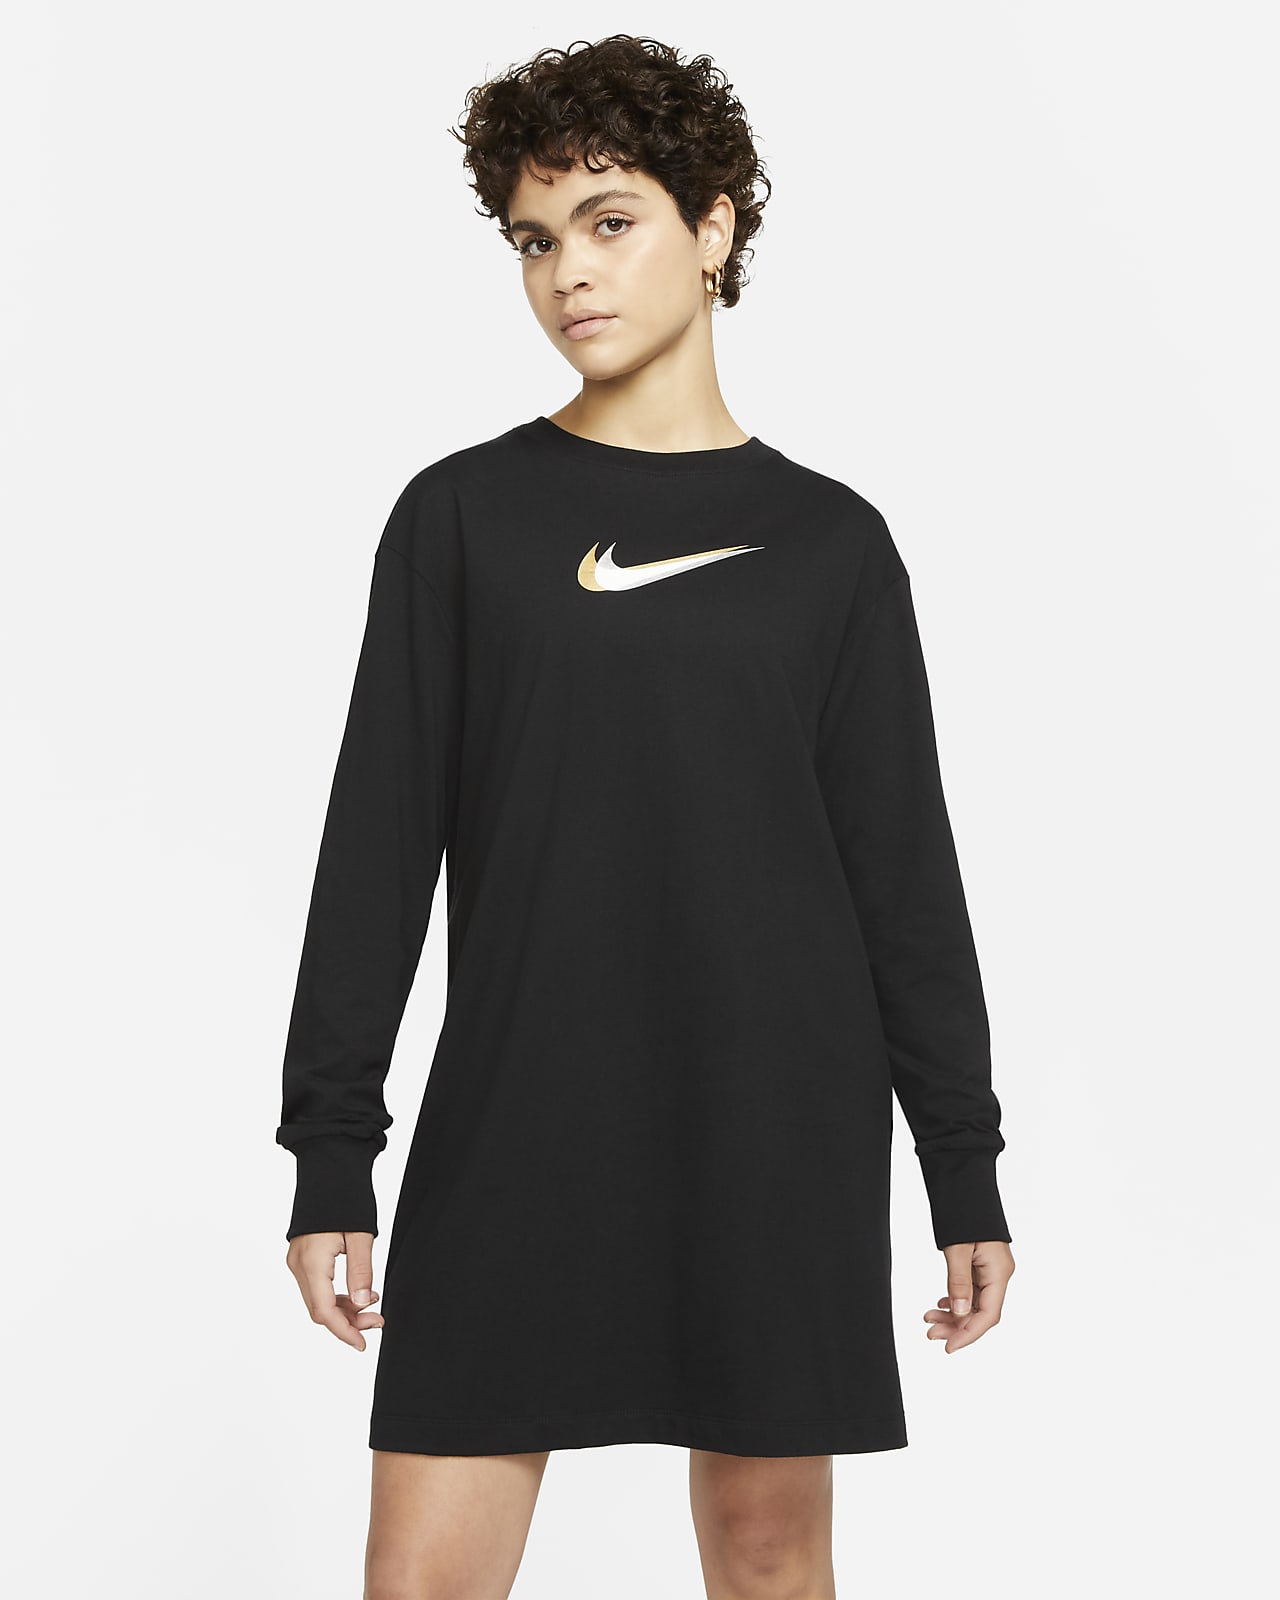 Long-Sleeve Dance Dress. Nike LU